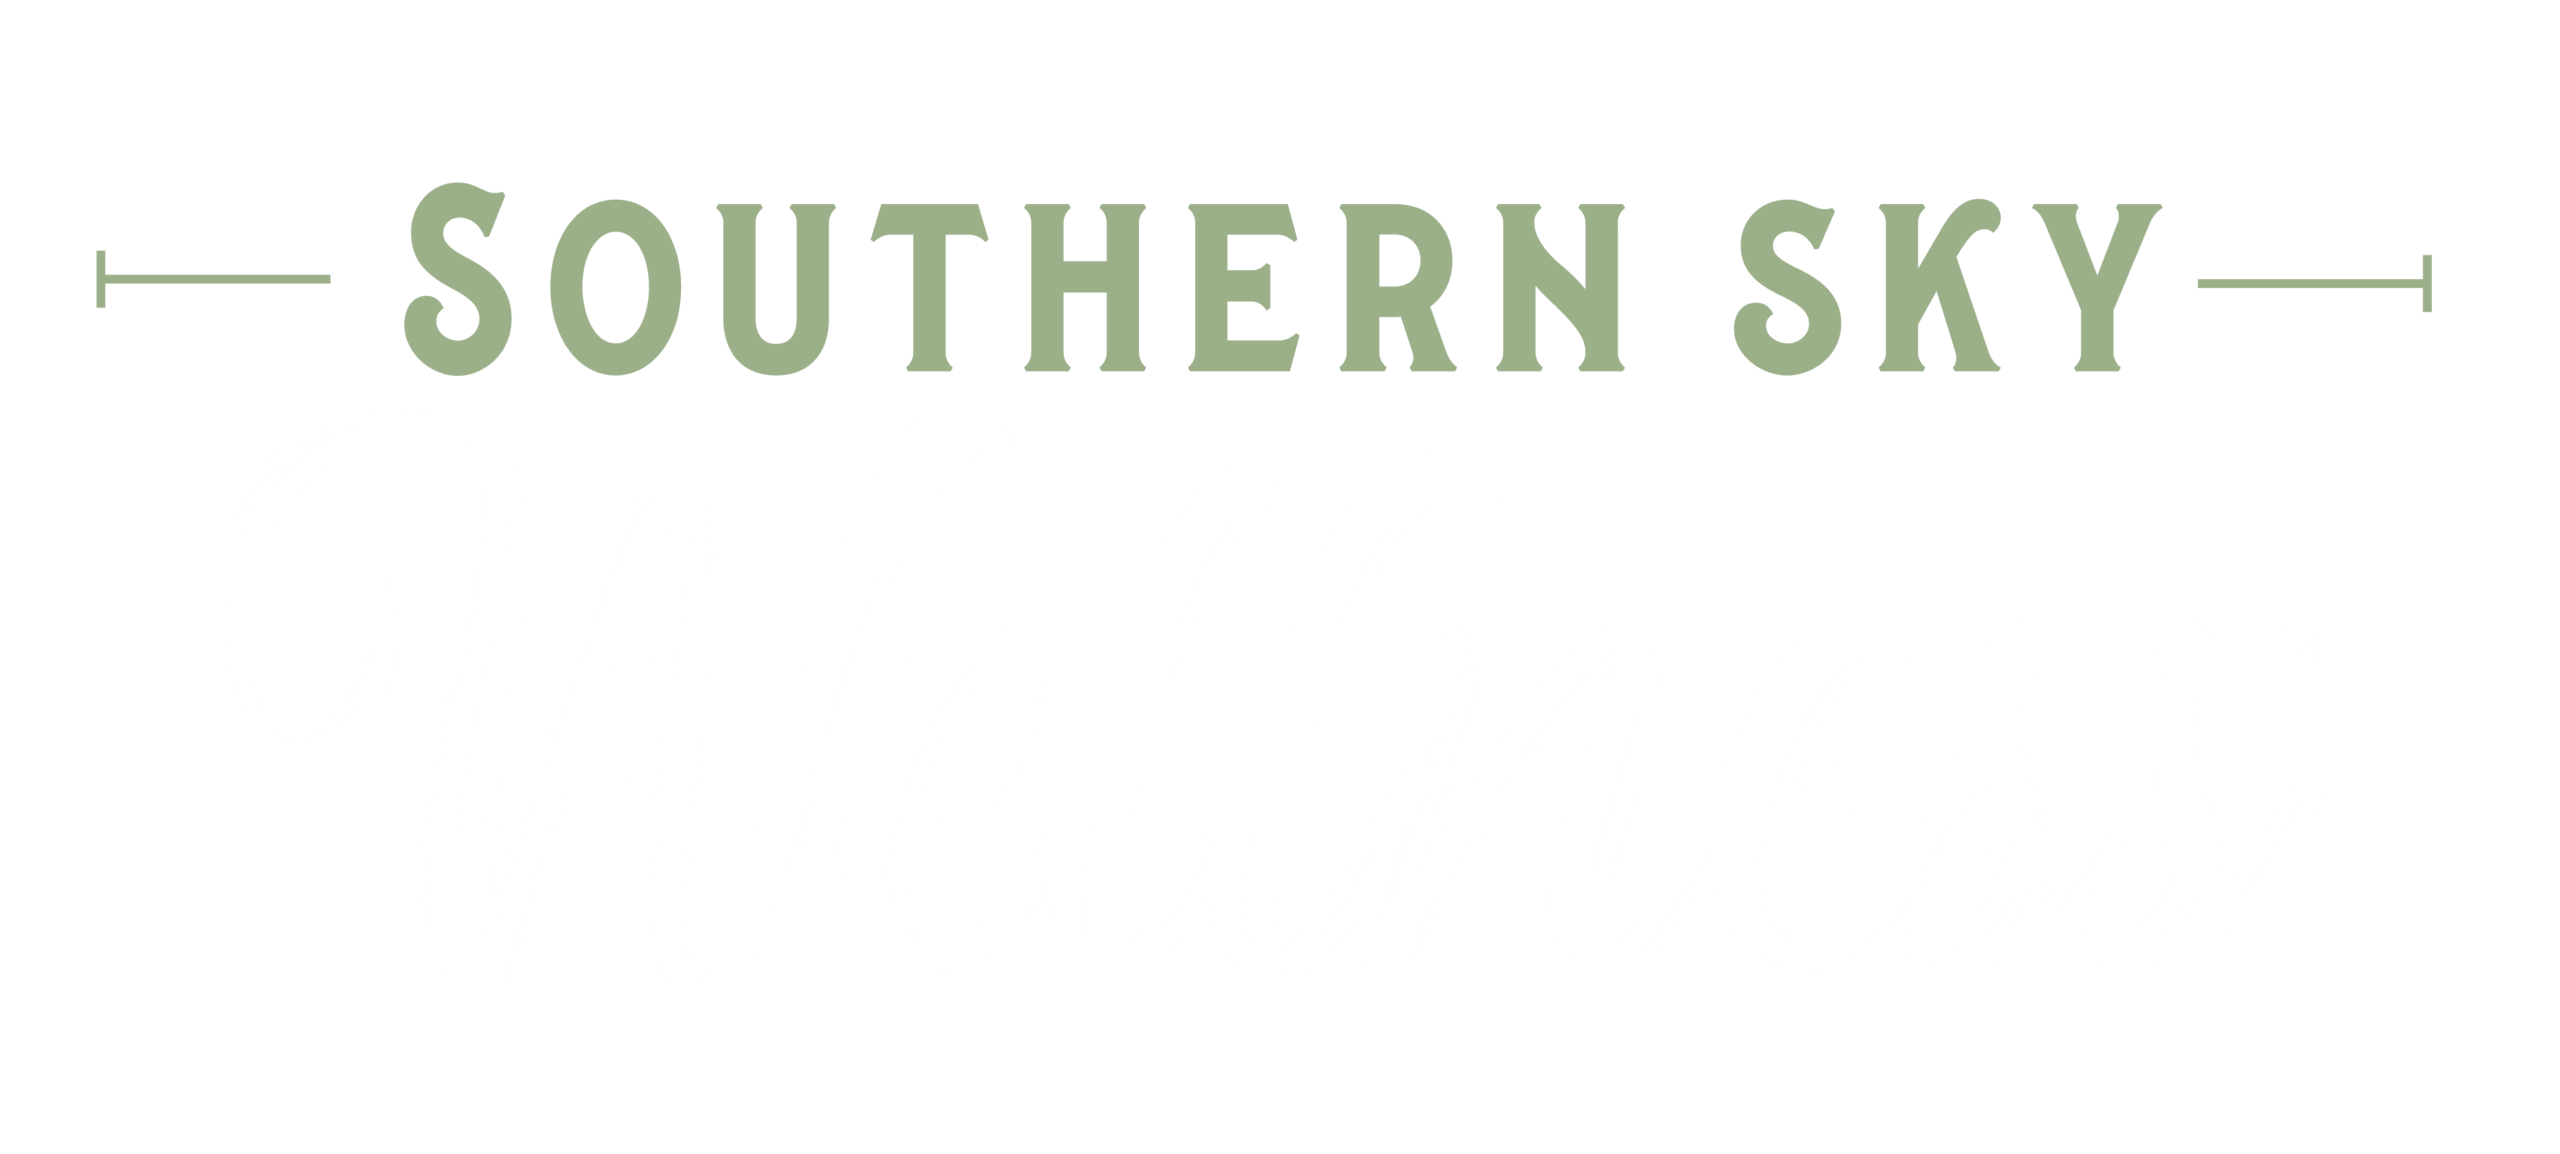 Southern Sky Wellness Dispensaries